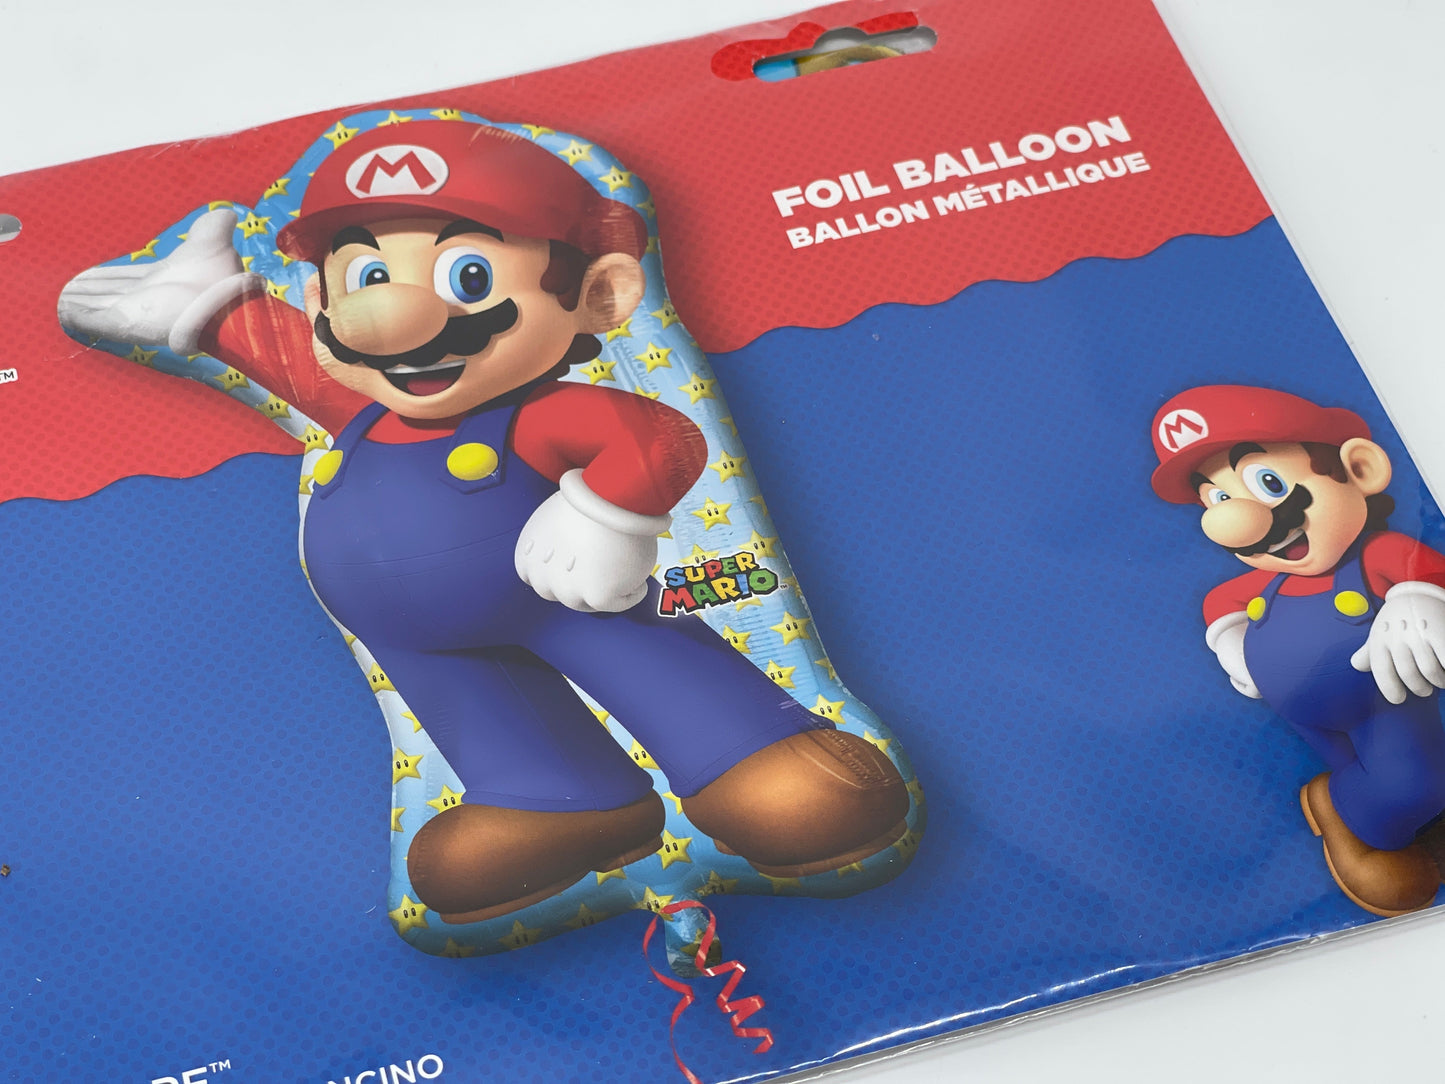 Folienballon "Super Mario" Helium Ballon Supershape Nintendo (55 cm x 83 cm)